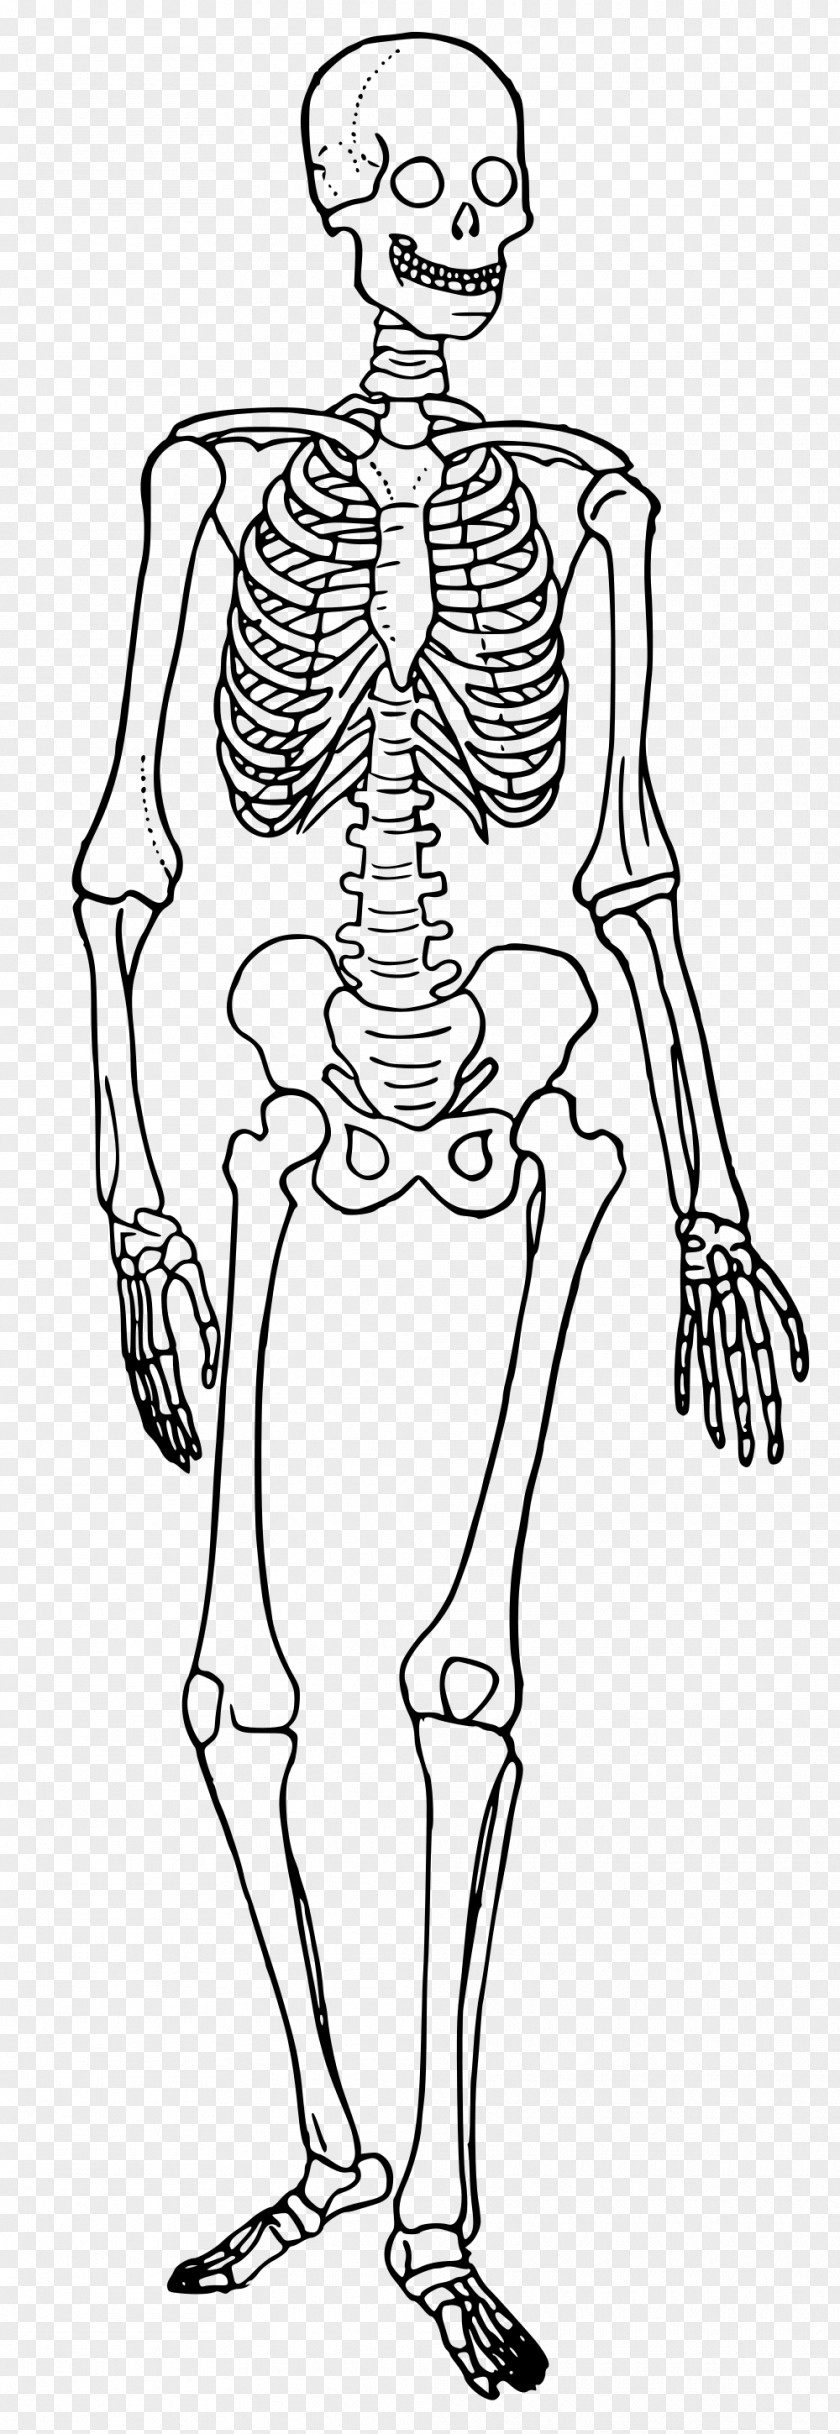 Skeleton The Skeletal System Human Body Diagram Bone PNG